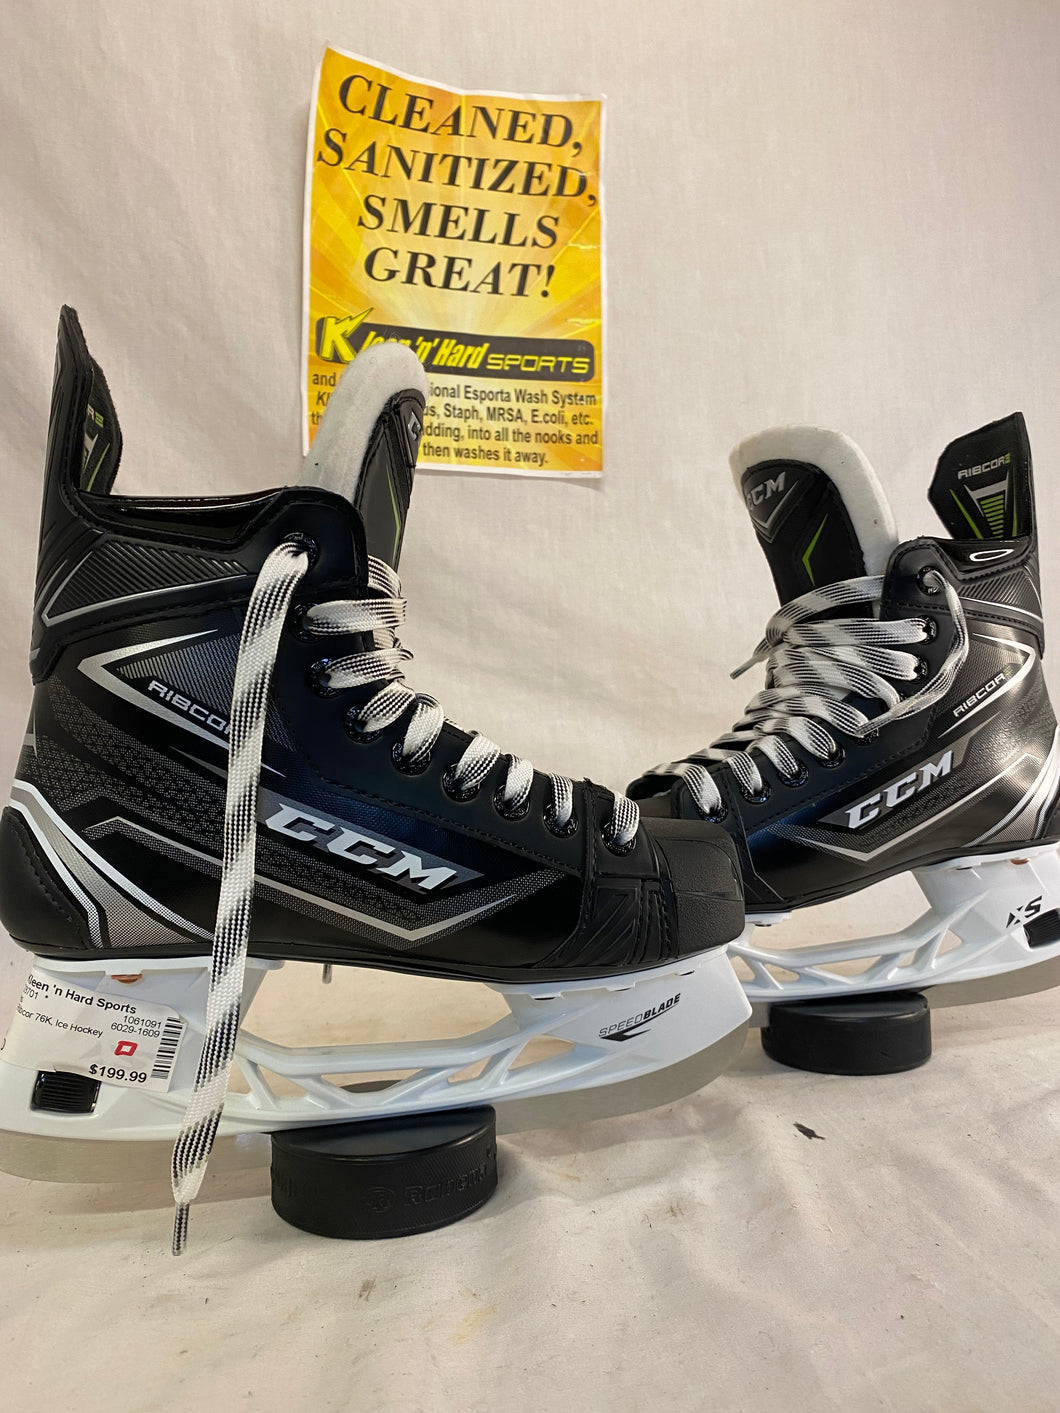 New CCM Ribcor 76K Size 3 D Ice Hockey Skates